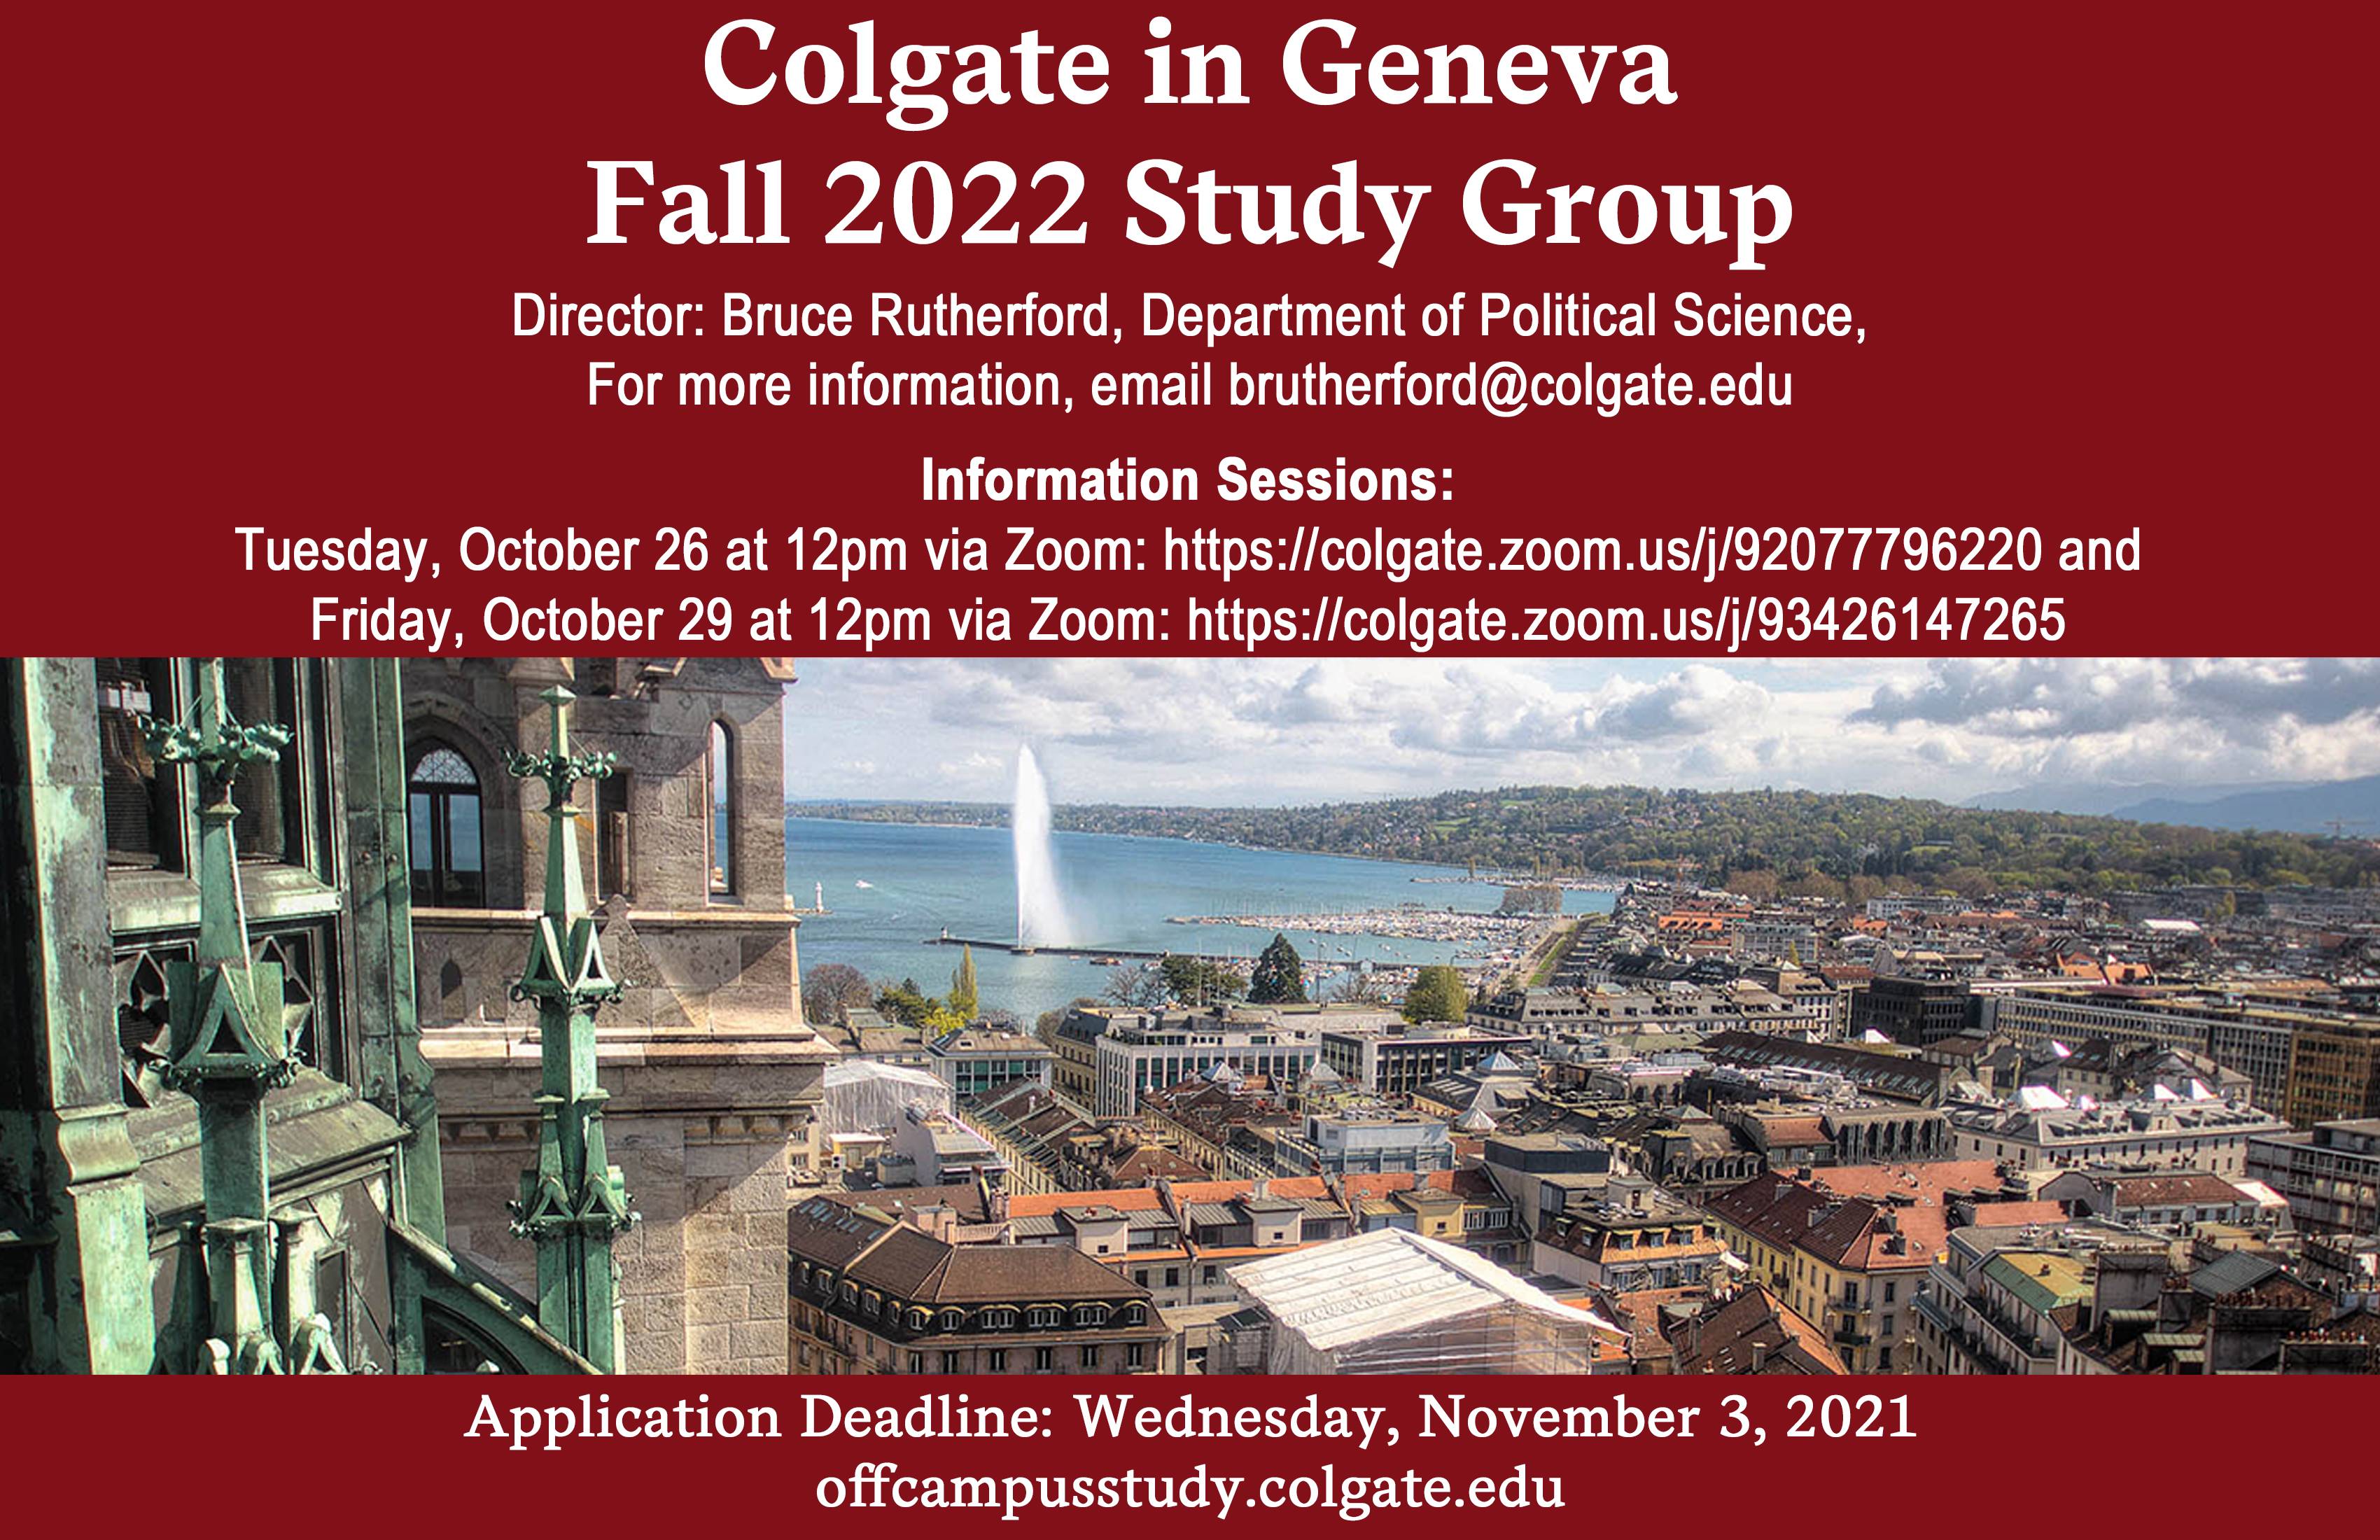 Fall 2022 Geneva Study Group Poster